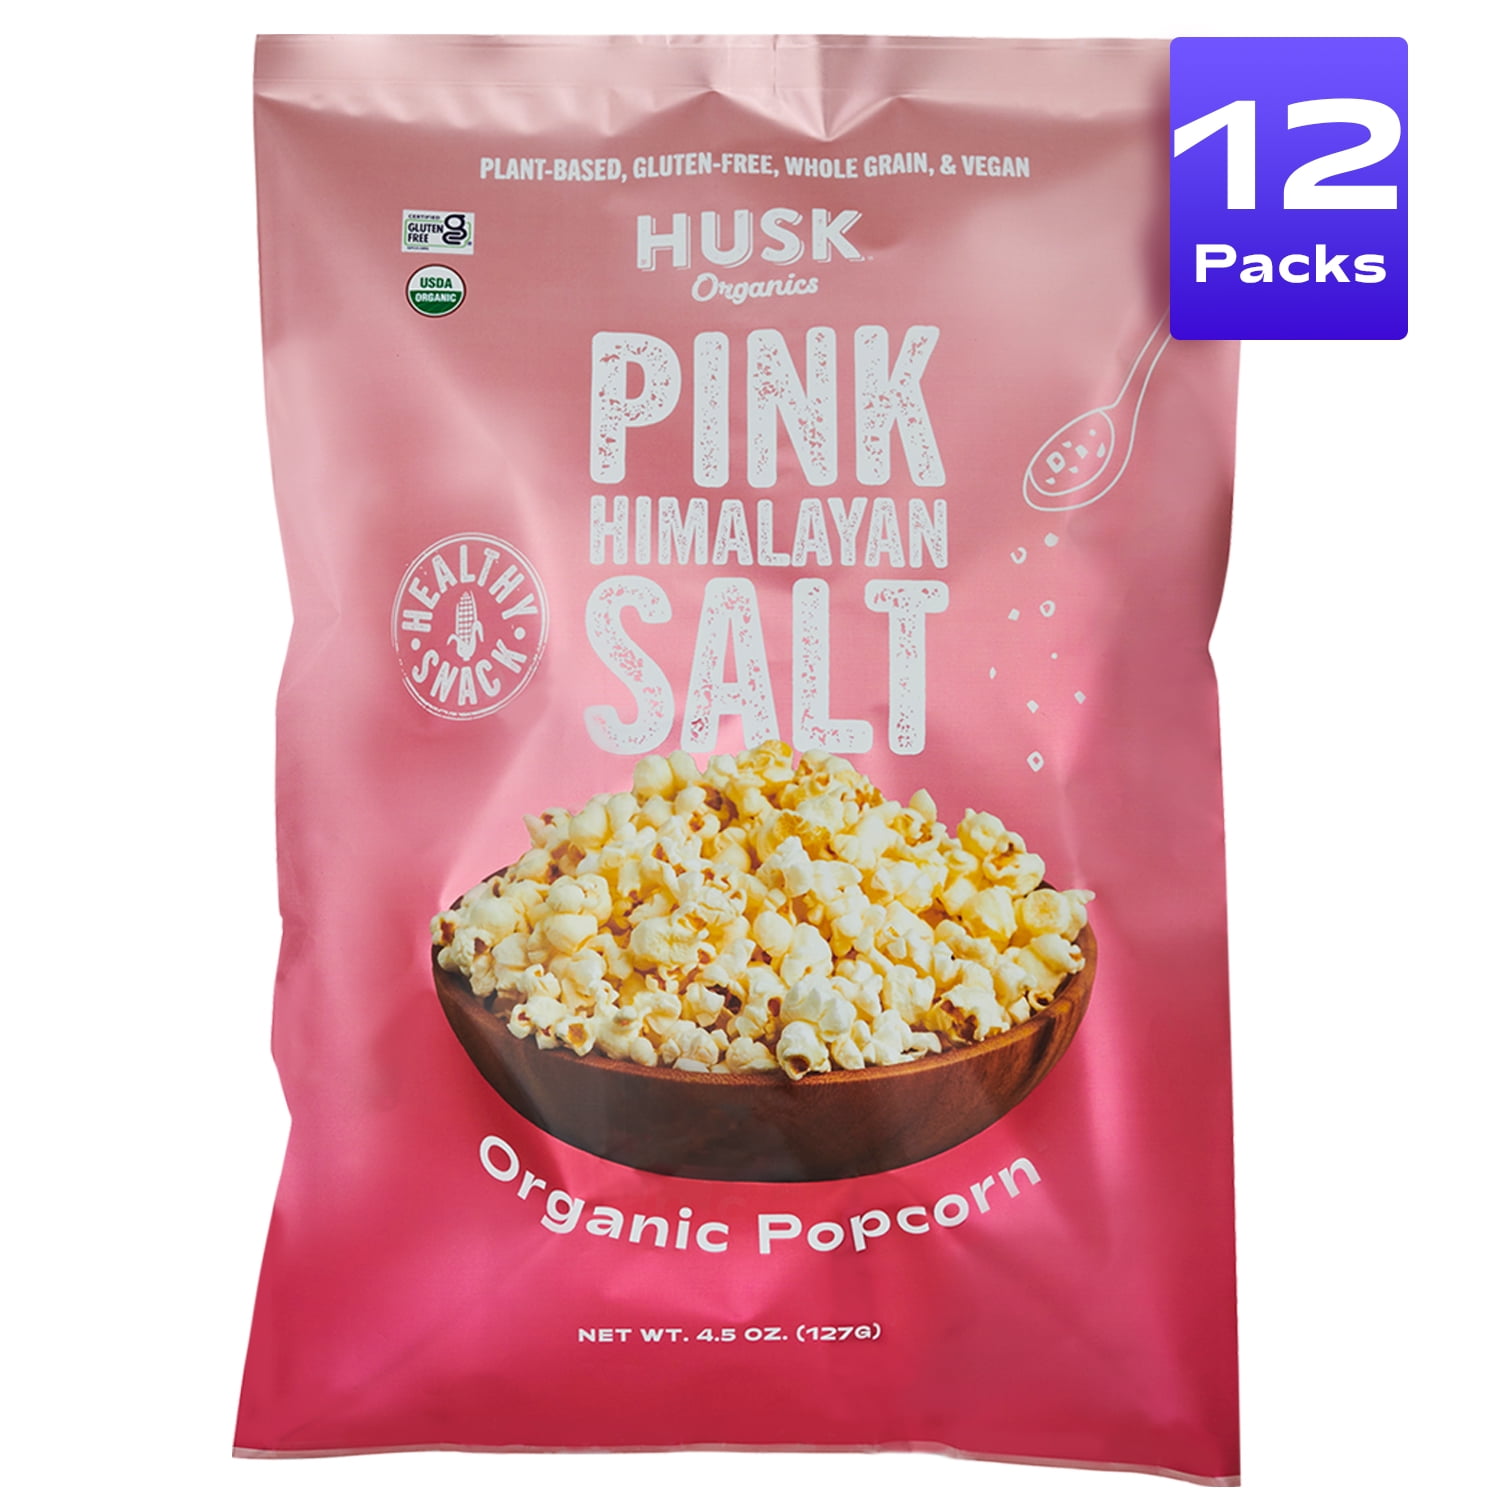 Skinny Pop Organic Popcorn